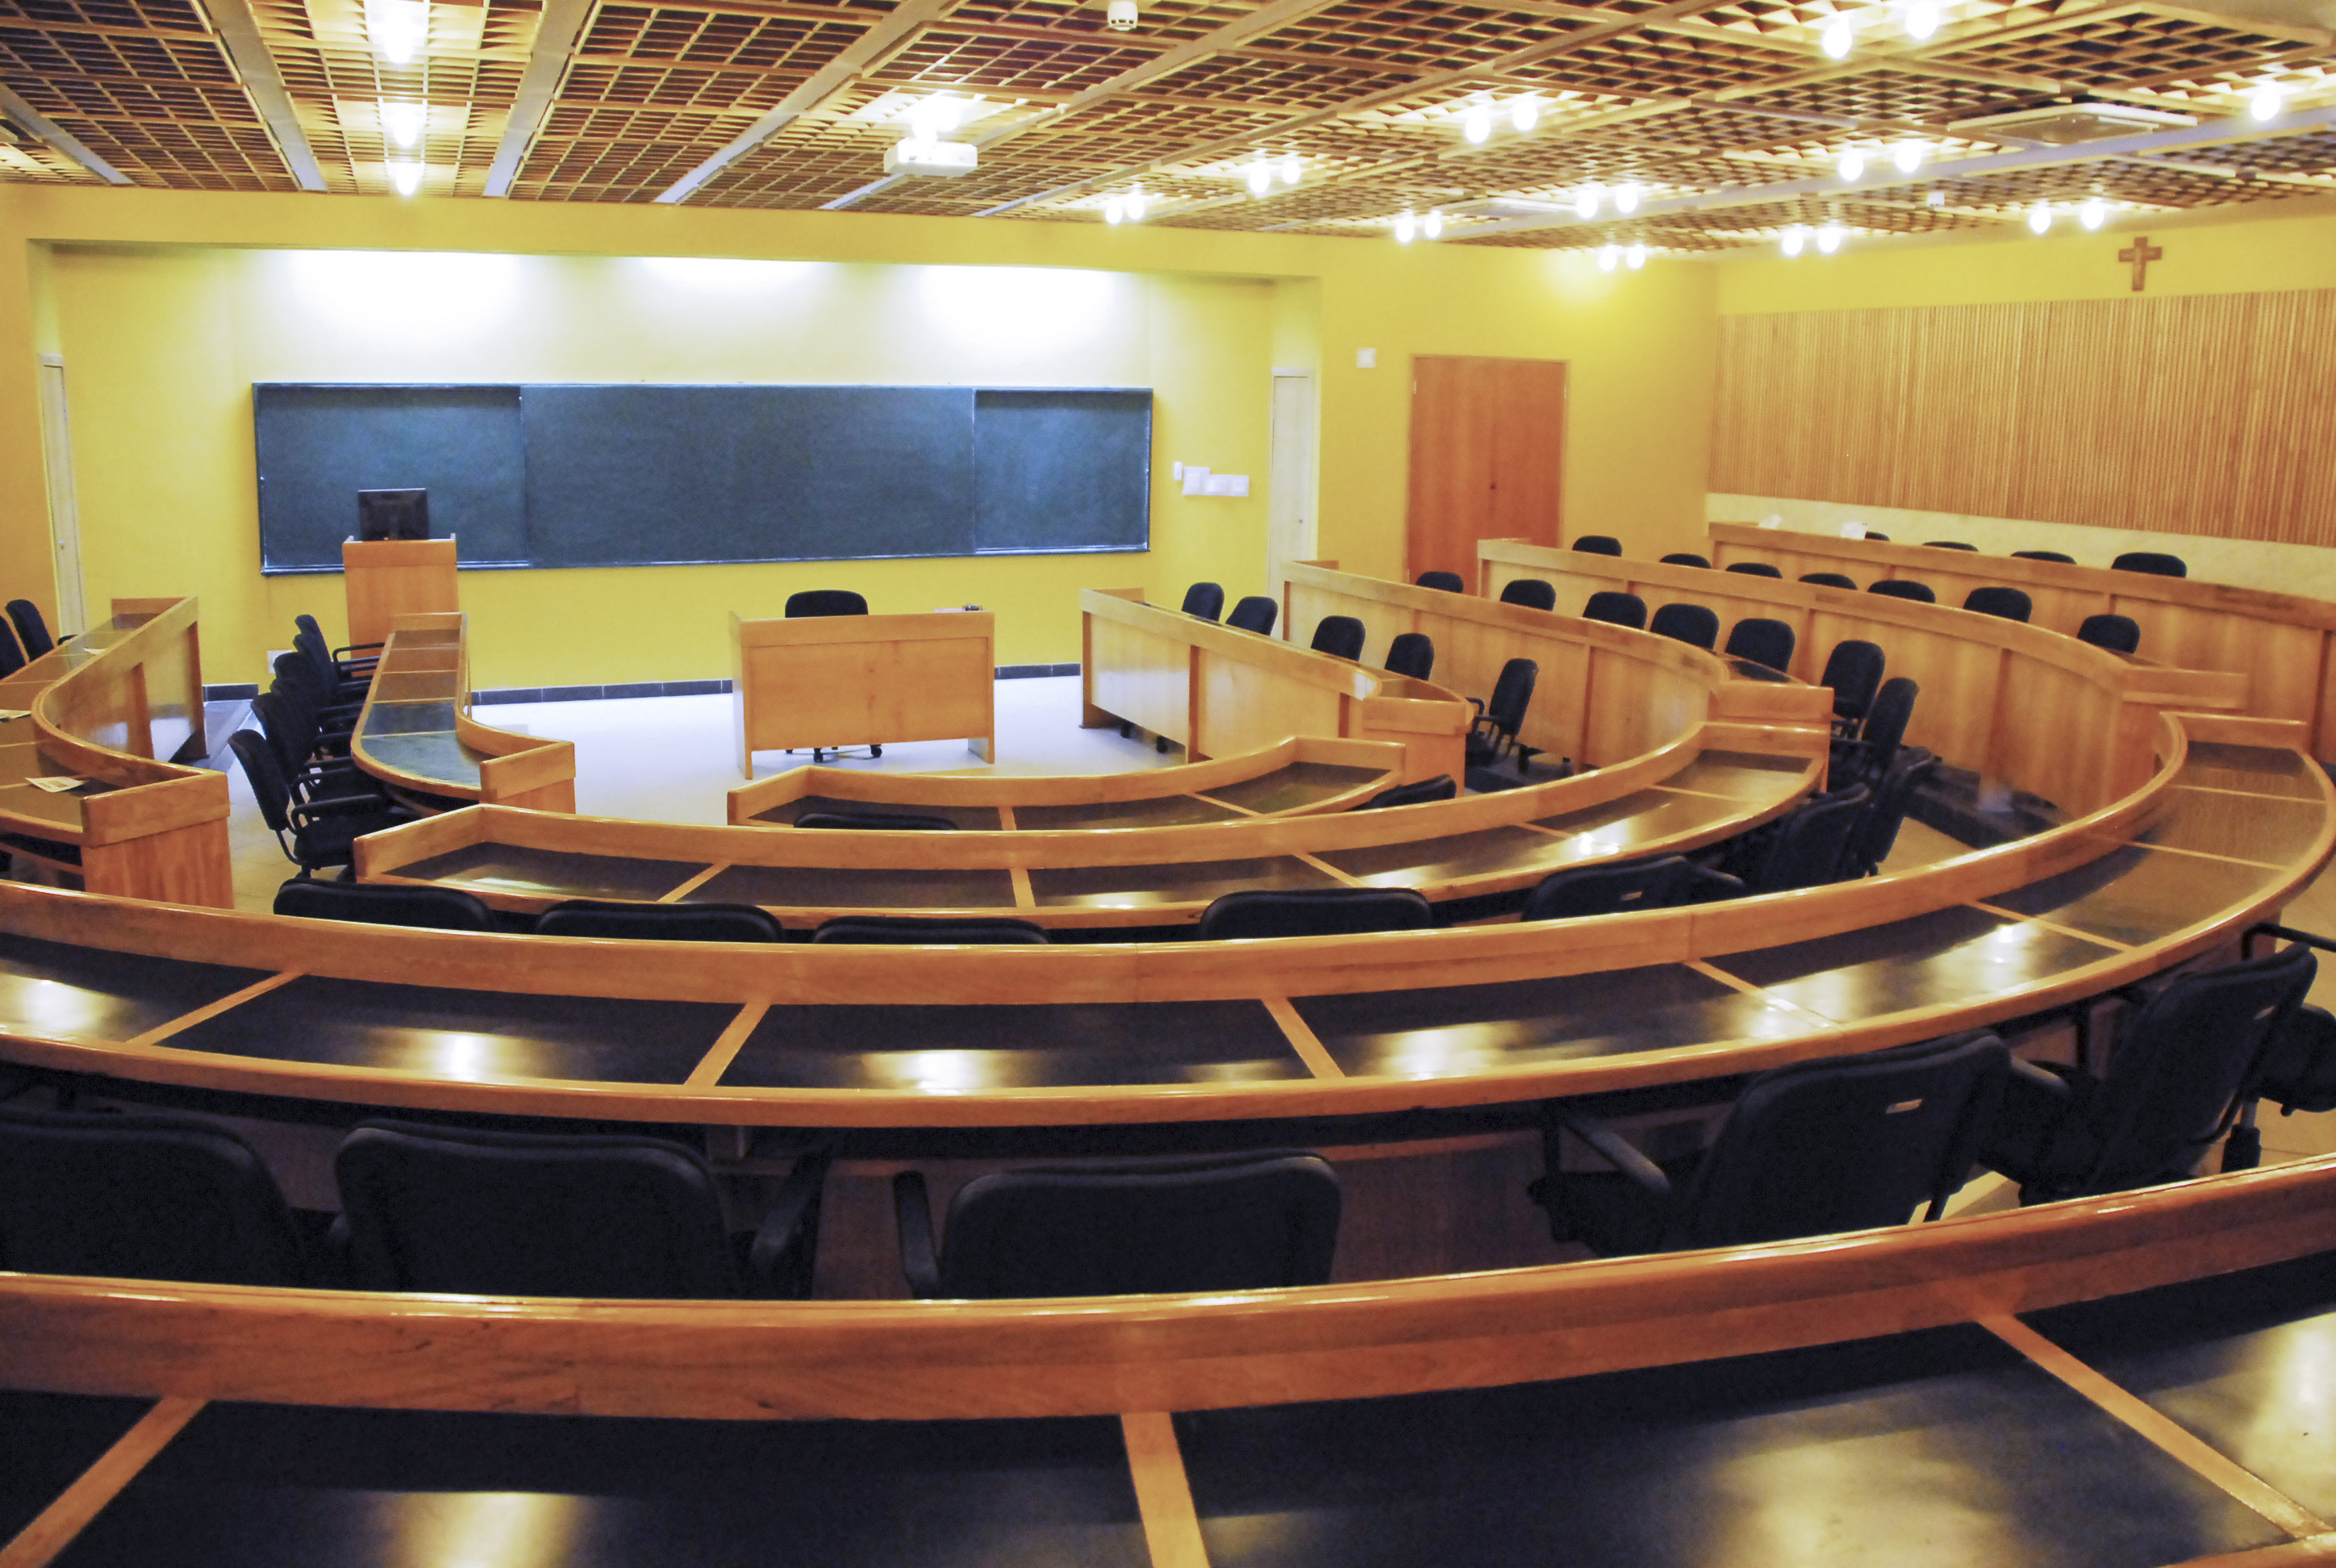 File:Lagos Business School's Classroom.jpg - Wikimedia Commons